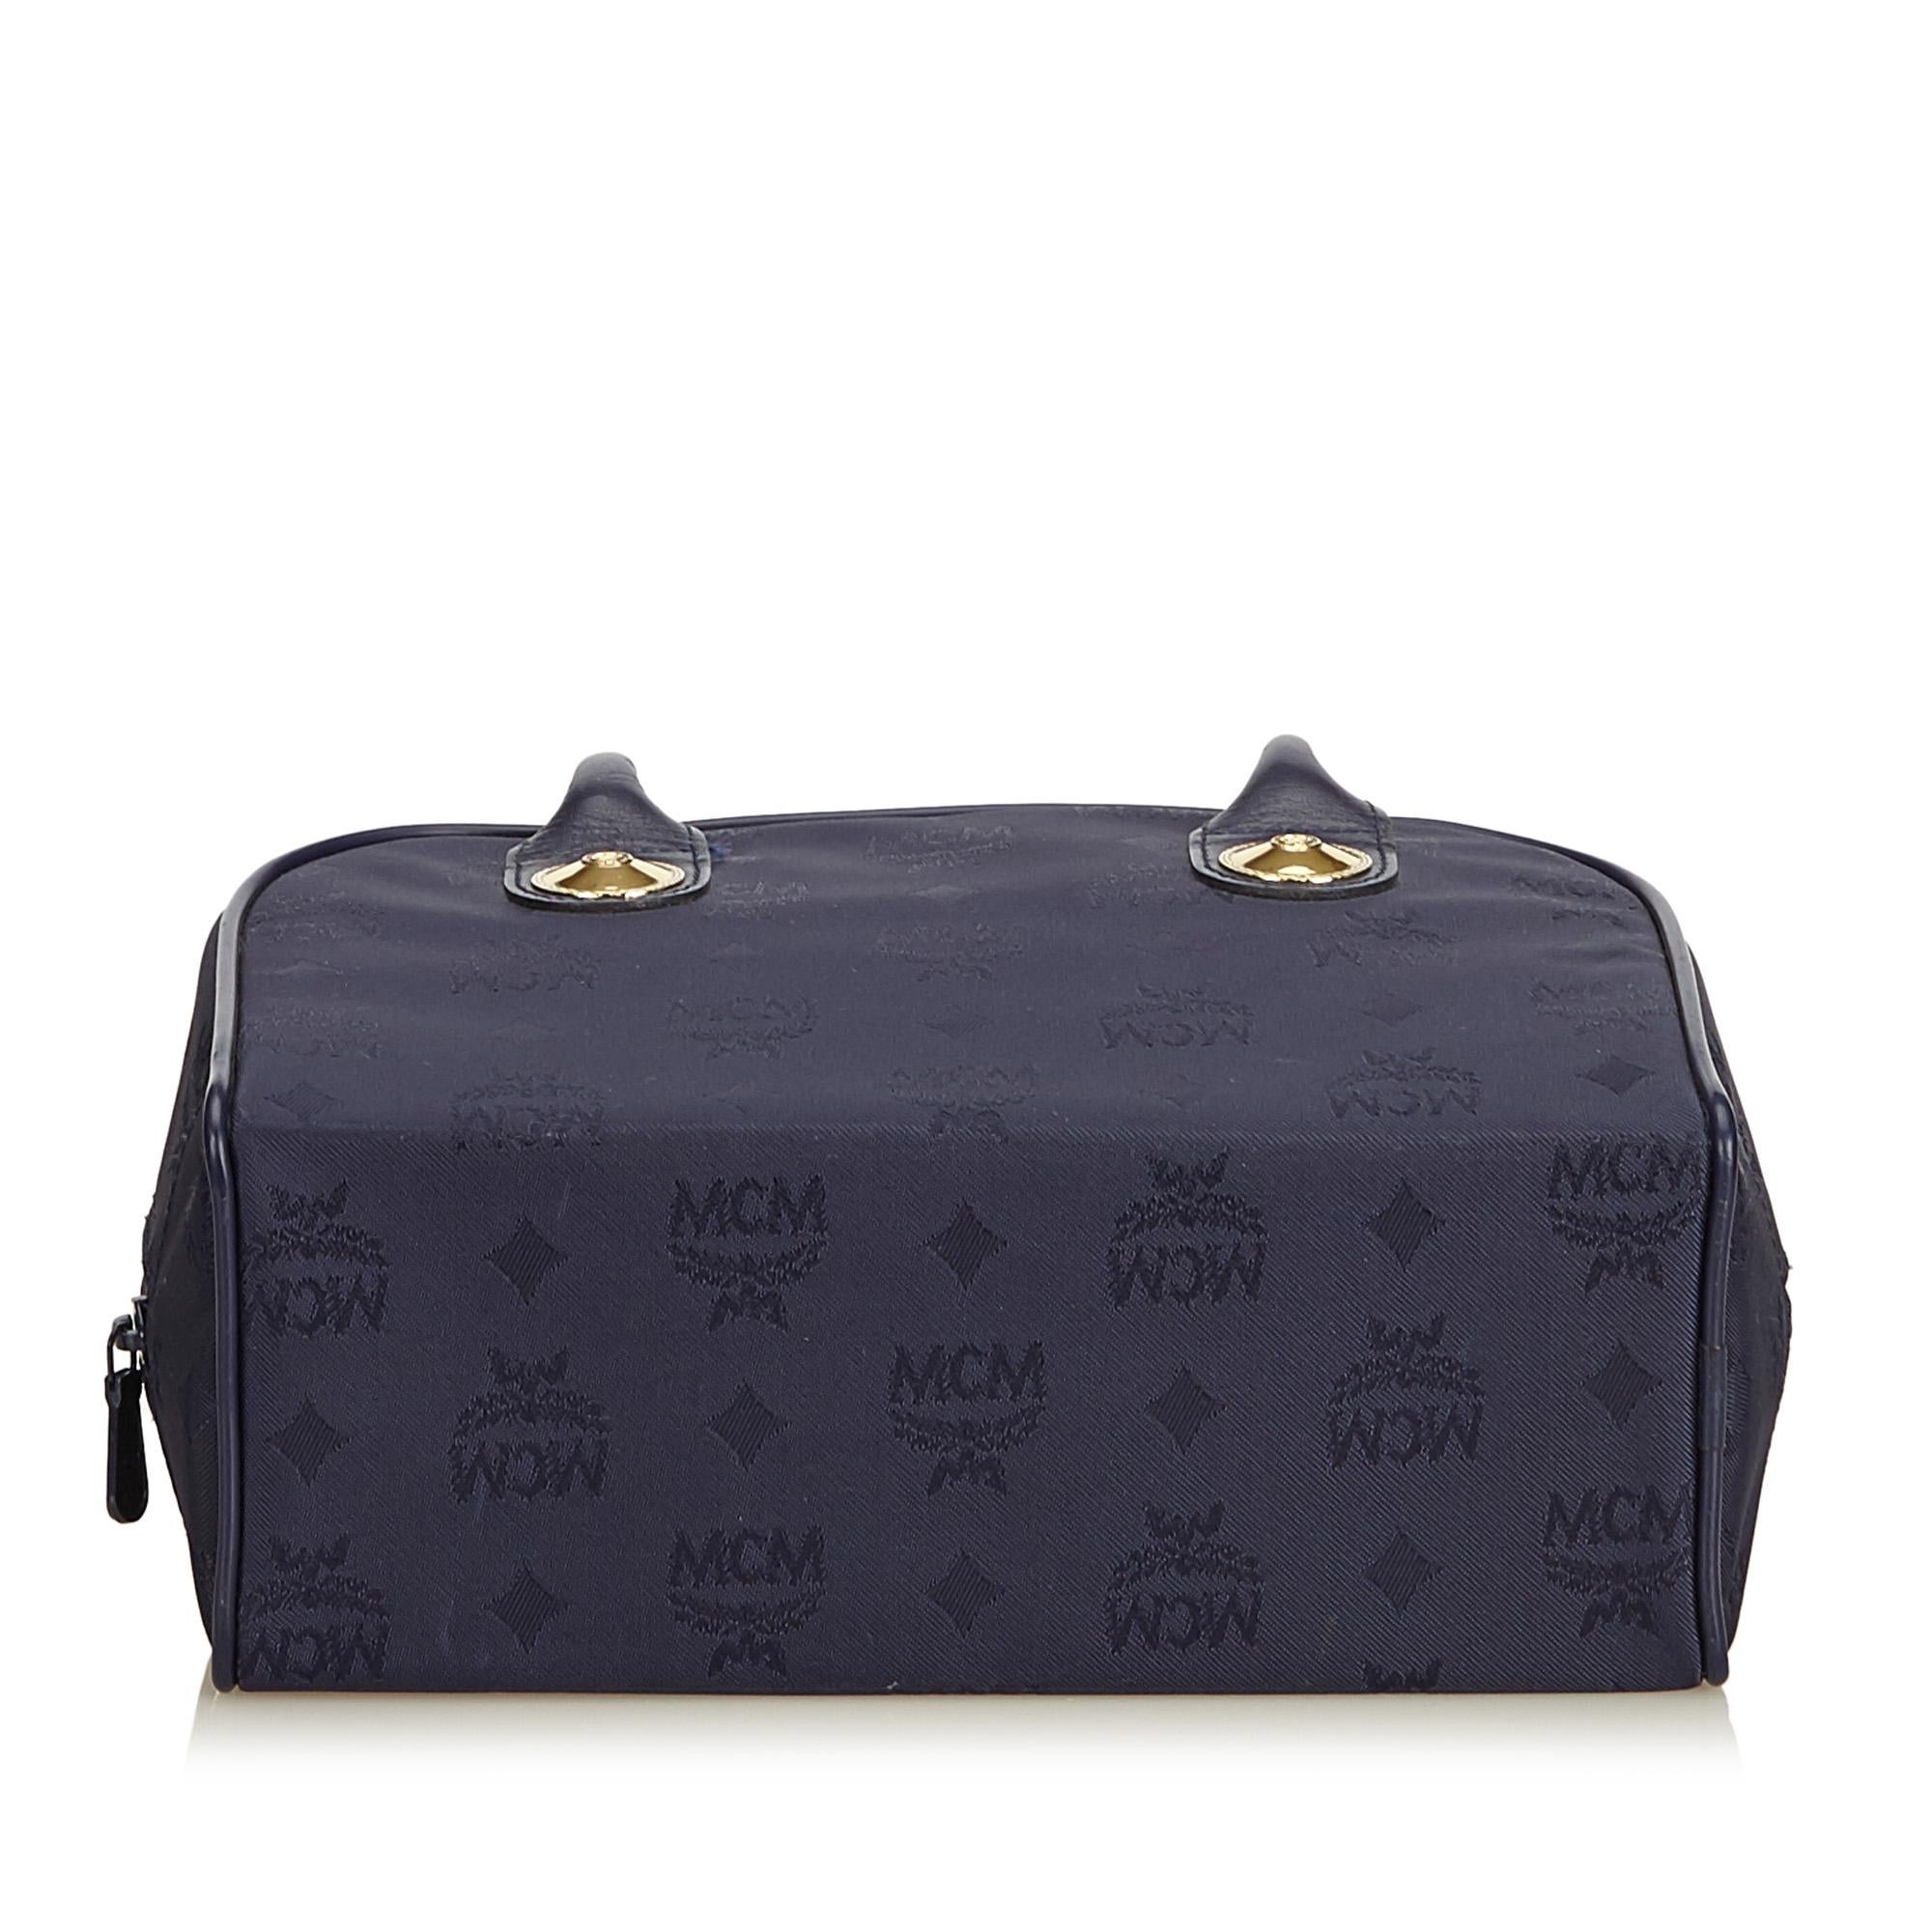 Vintage Authentic MCM Blue Navy Nylon Fabric Visetos Handbag Germany SMALL  In Good Condition For Sale In Orlando, FL